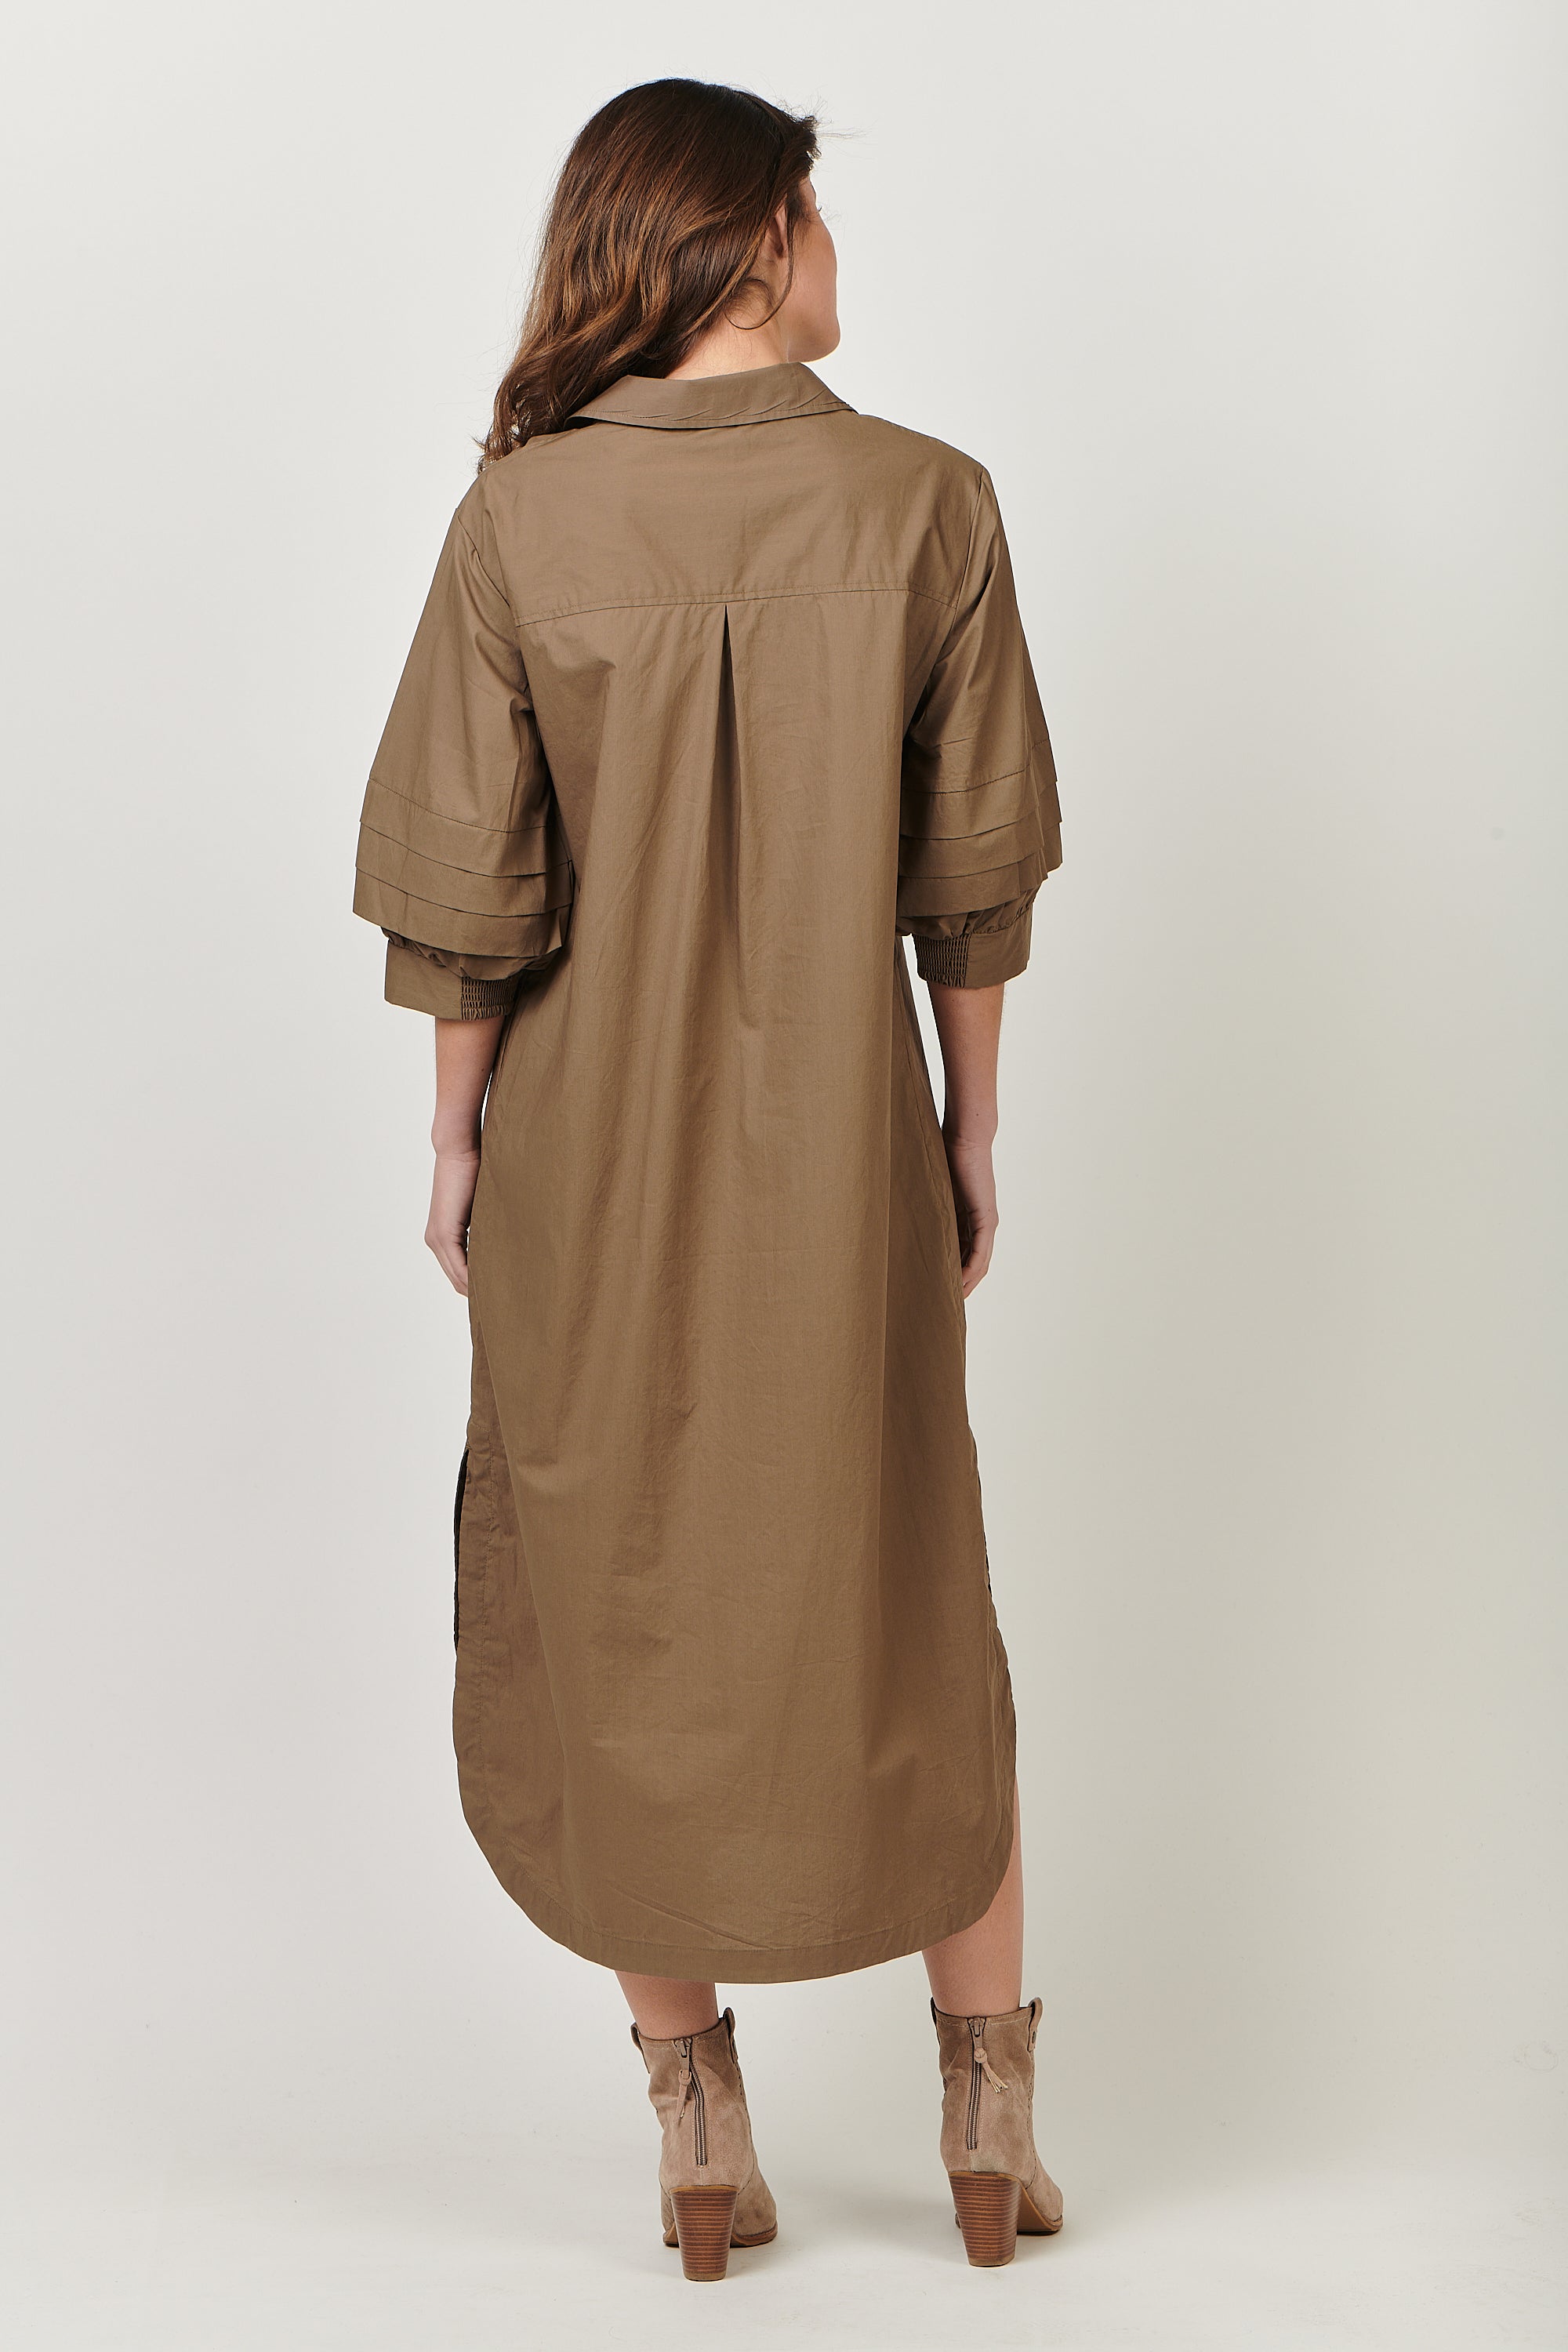 Poplin Dress - Khaki-Dresses-Naturals by O&J-The Bay Room